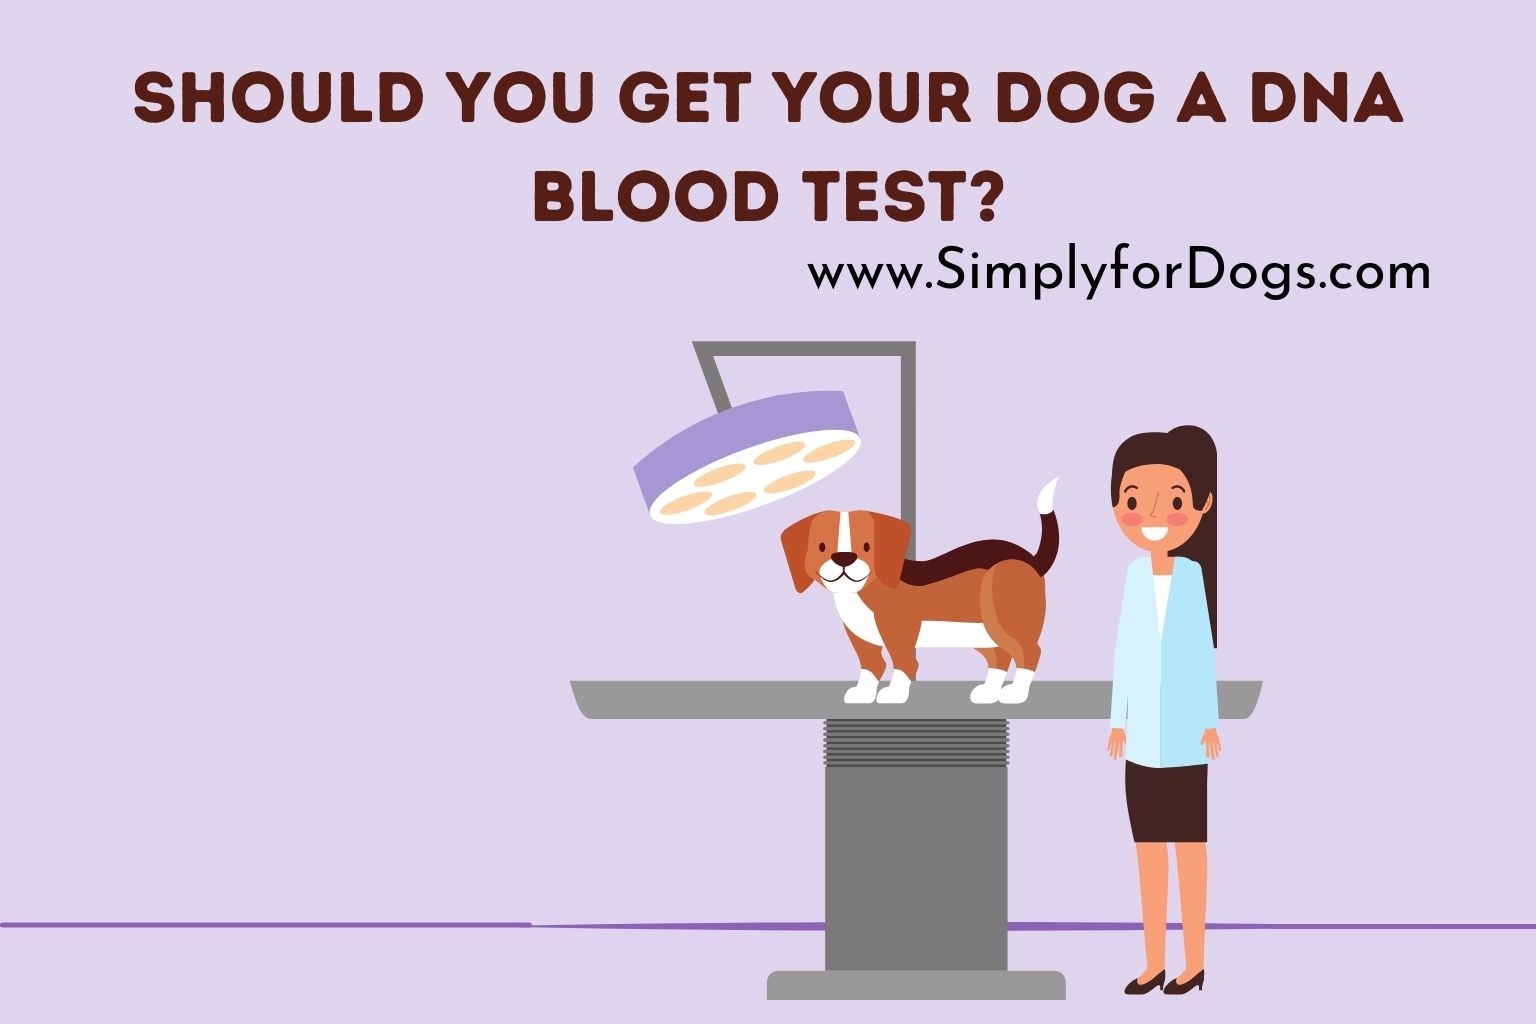 Should You Get Your Dog a DNA Blood Test